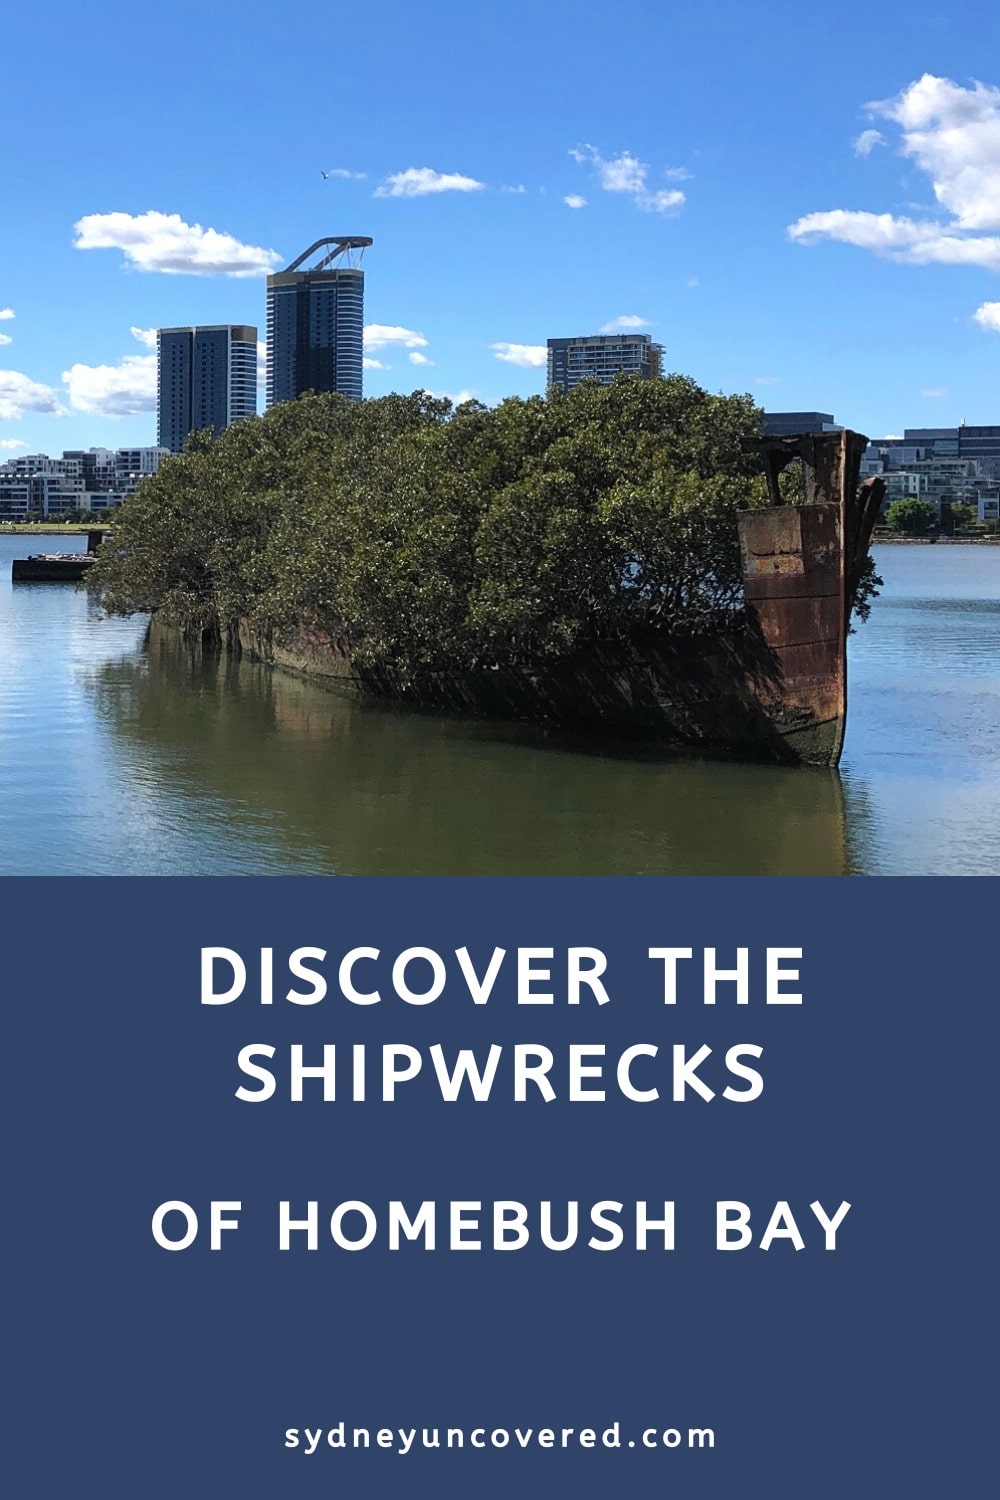 The shipwrecks of Homebush Bay